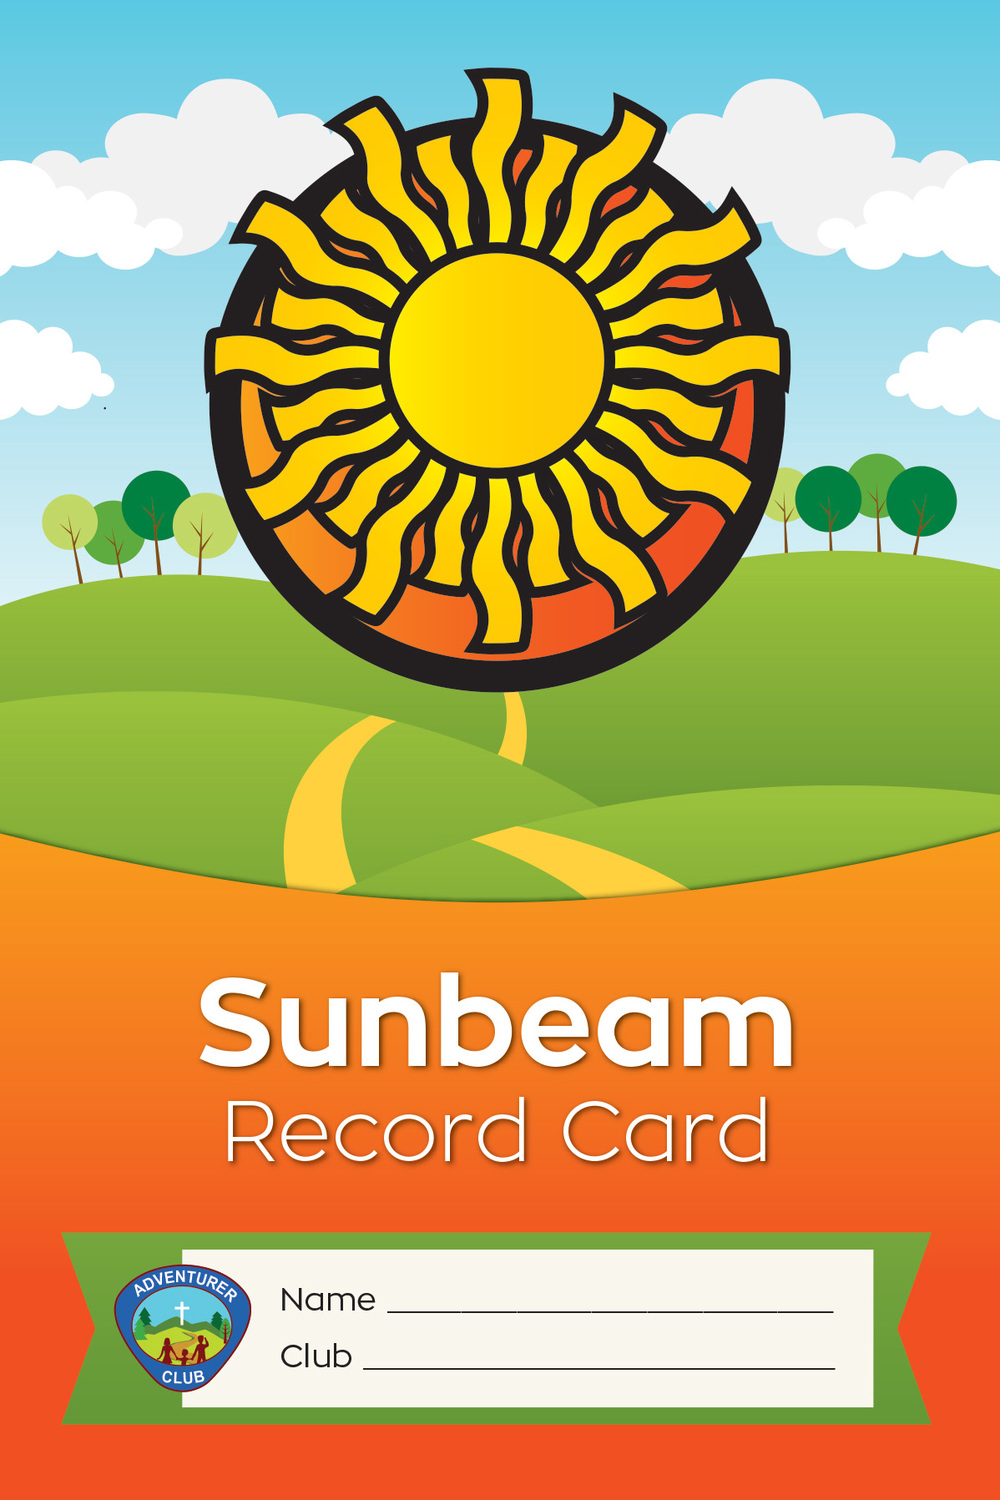 Sunbeam Record Card